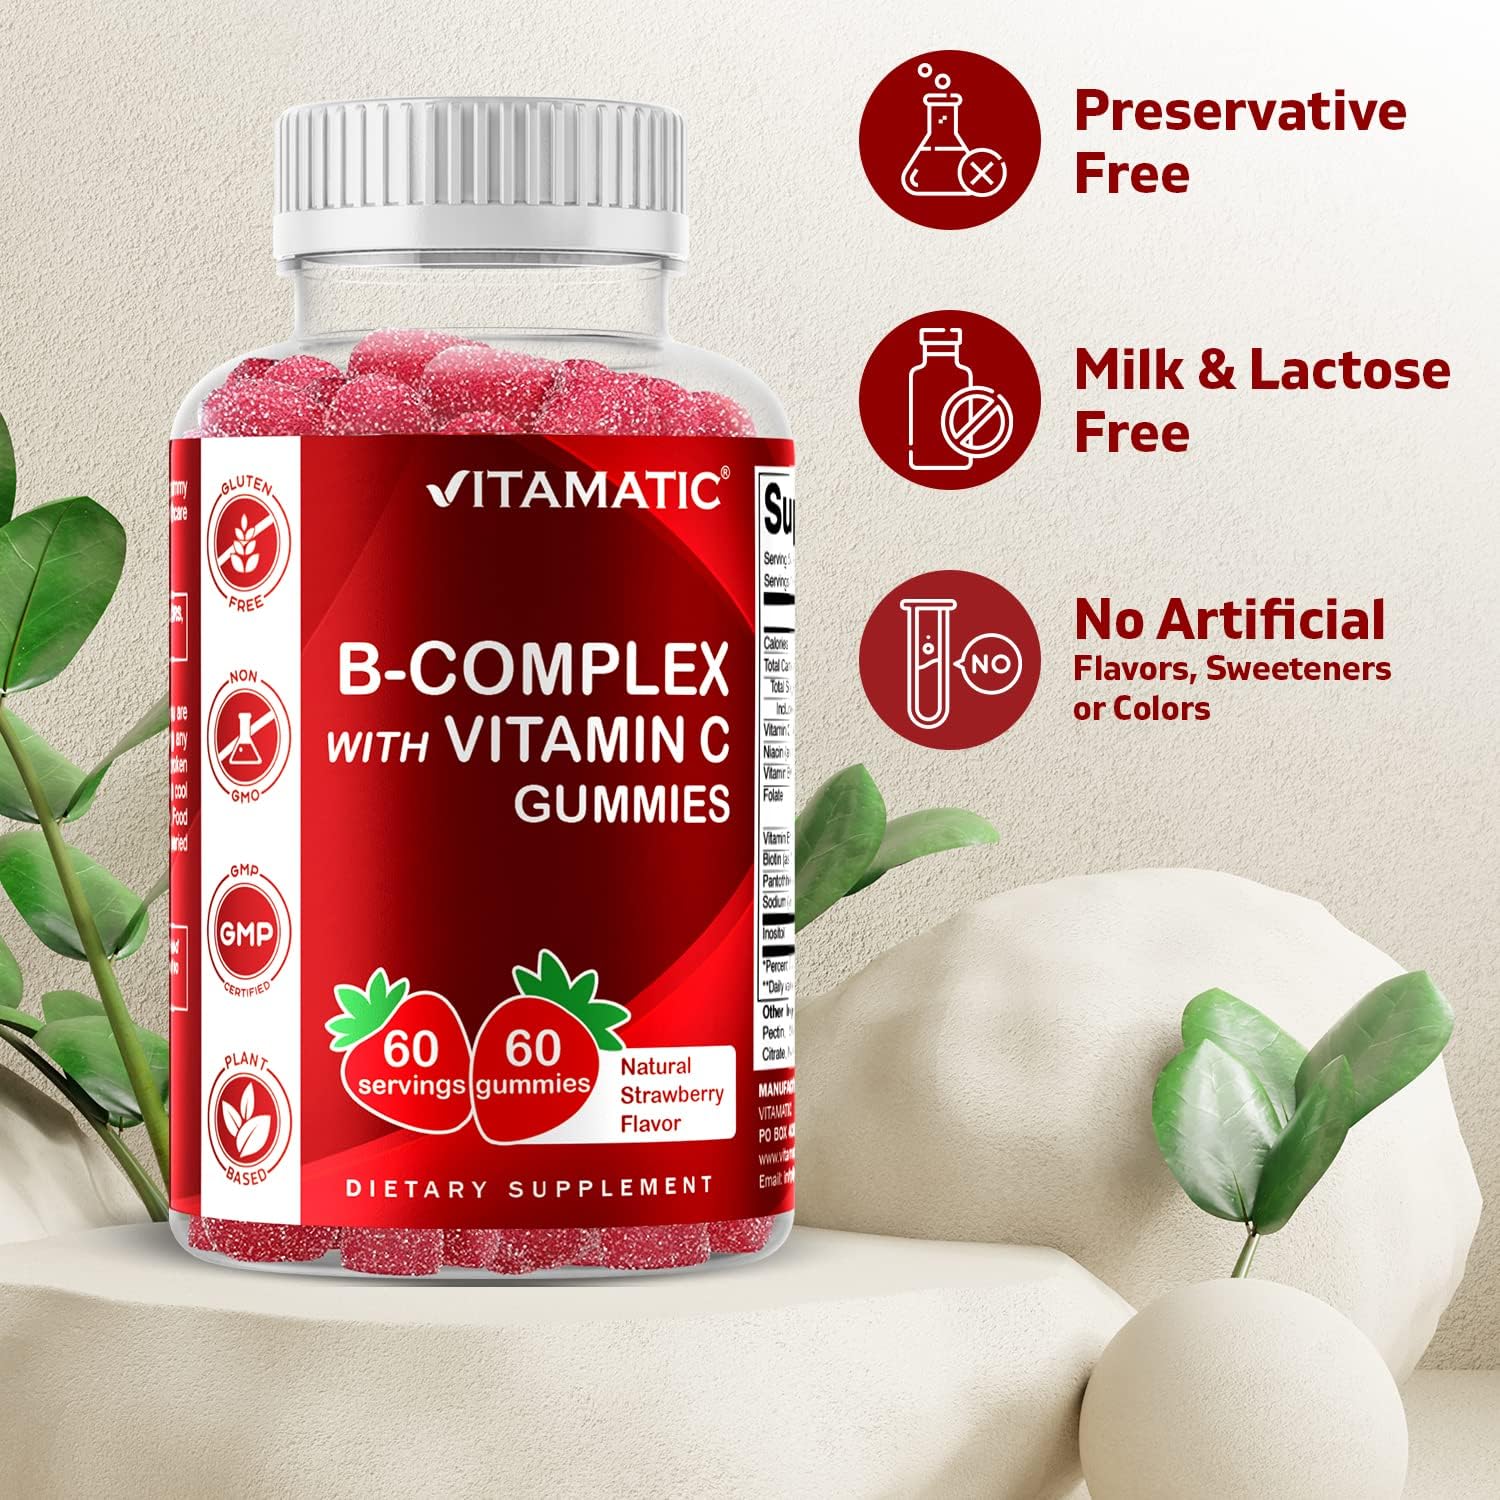 Vitamatic Vitamin B Complex Gummies with Vitamin C & Inositol - Natural Strawberry Flavor - 60 Gummies (1 Bottle) : Health & Household